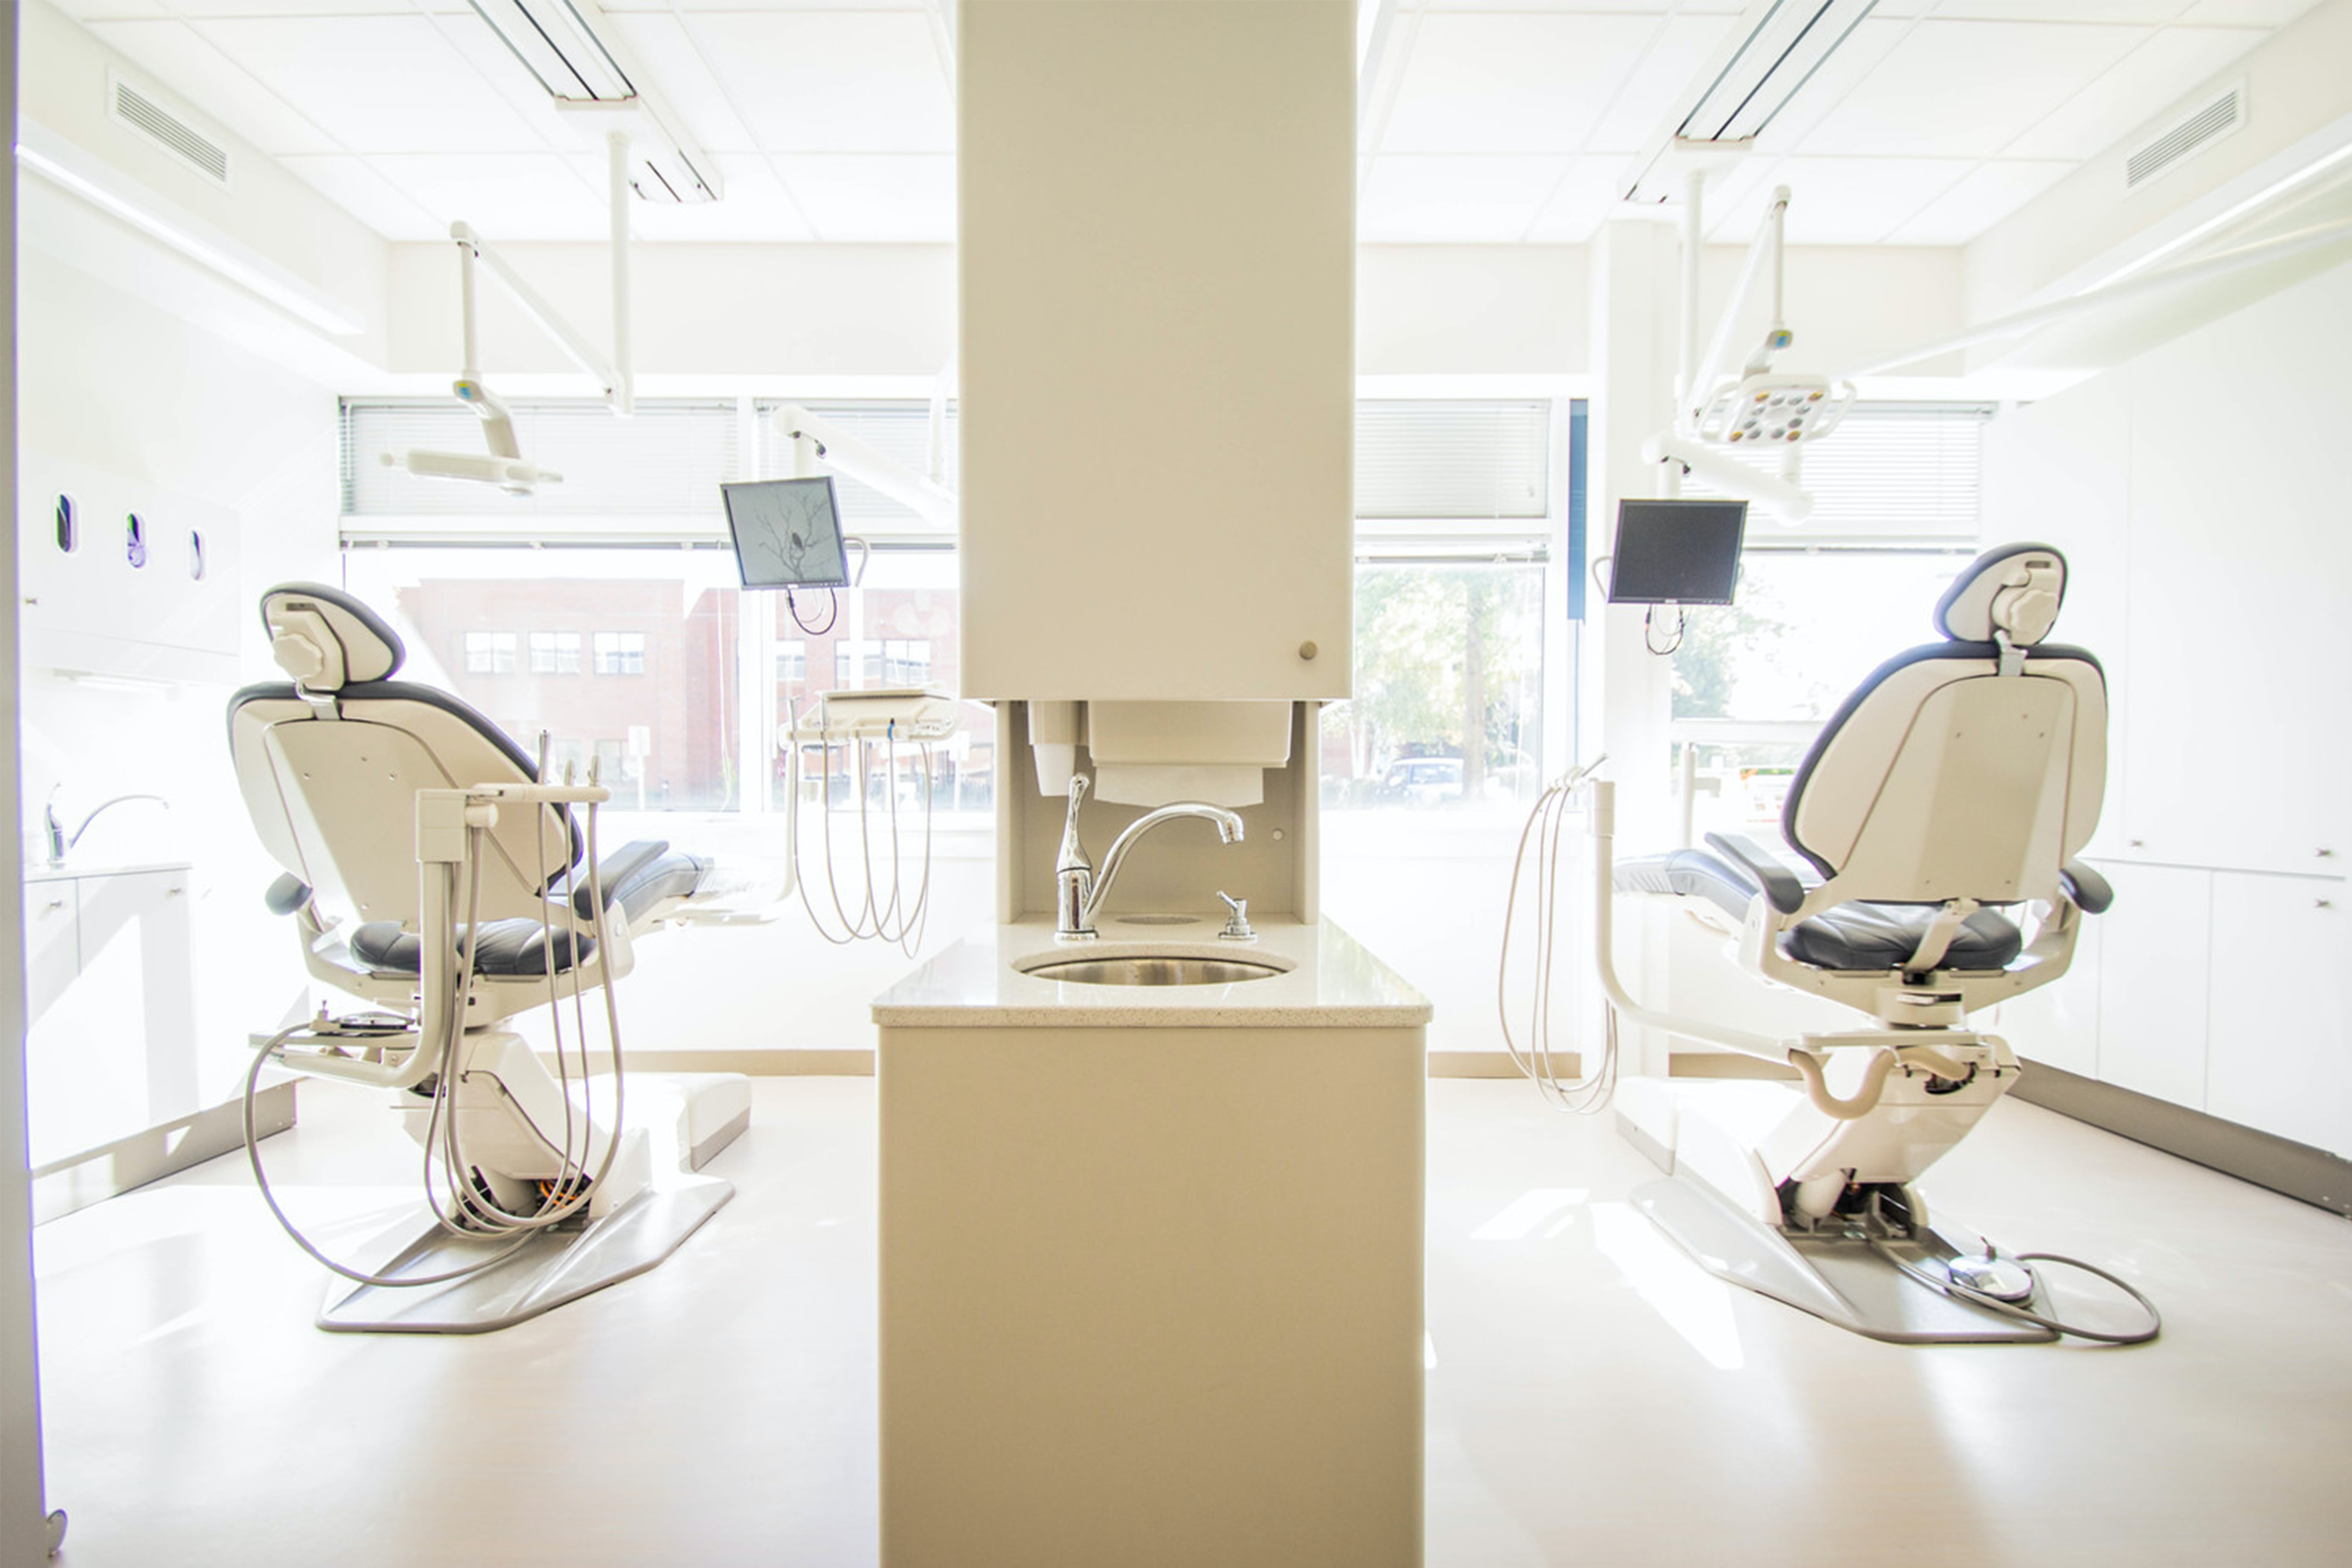 Provision of dental treatment in Estonia